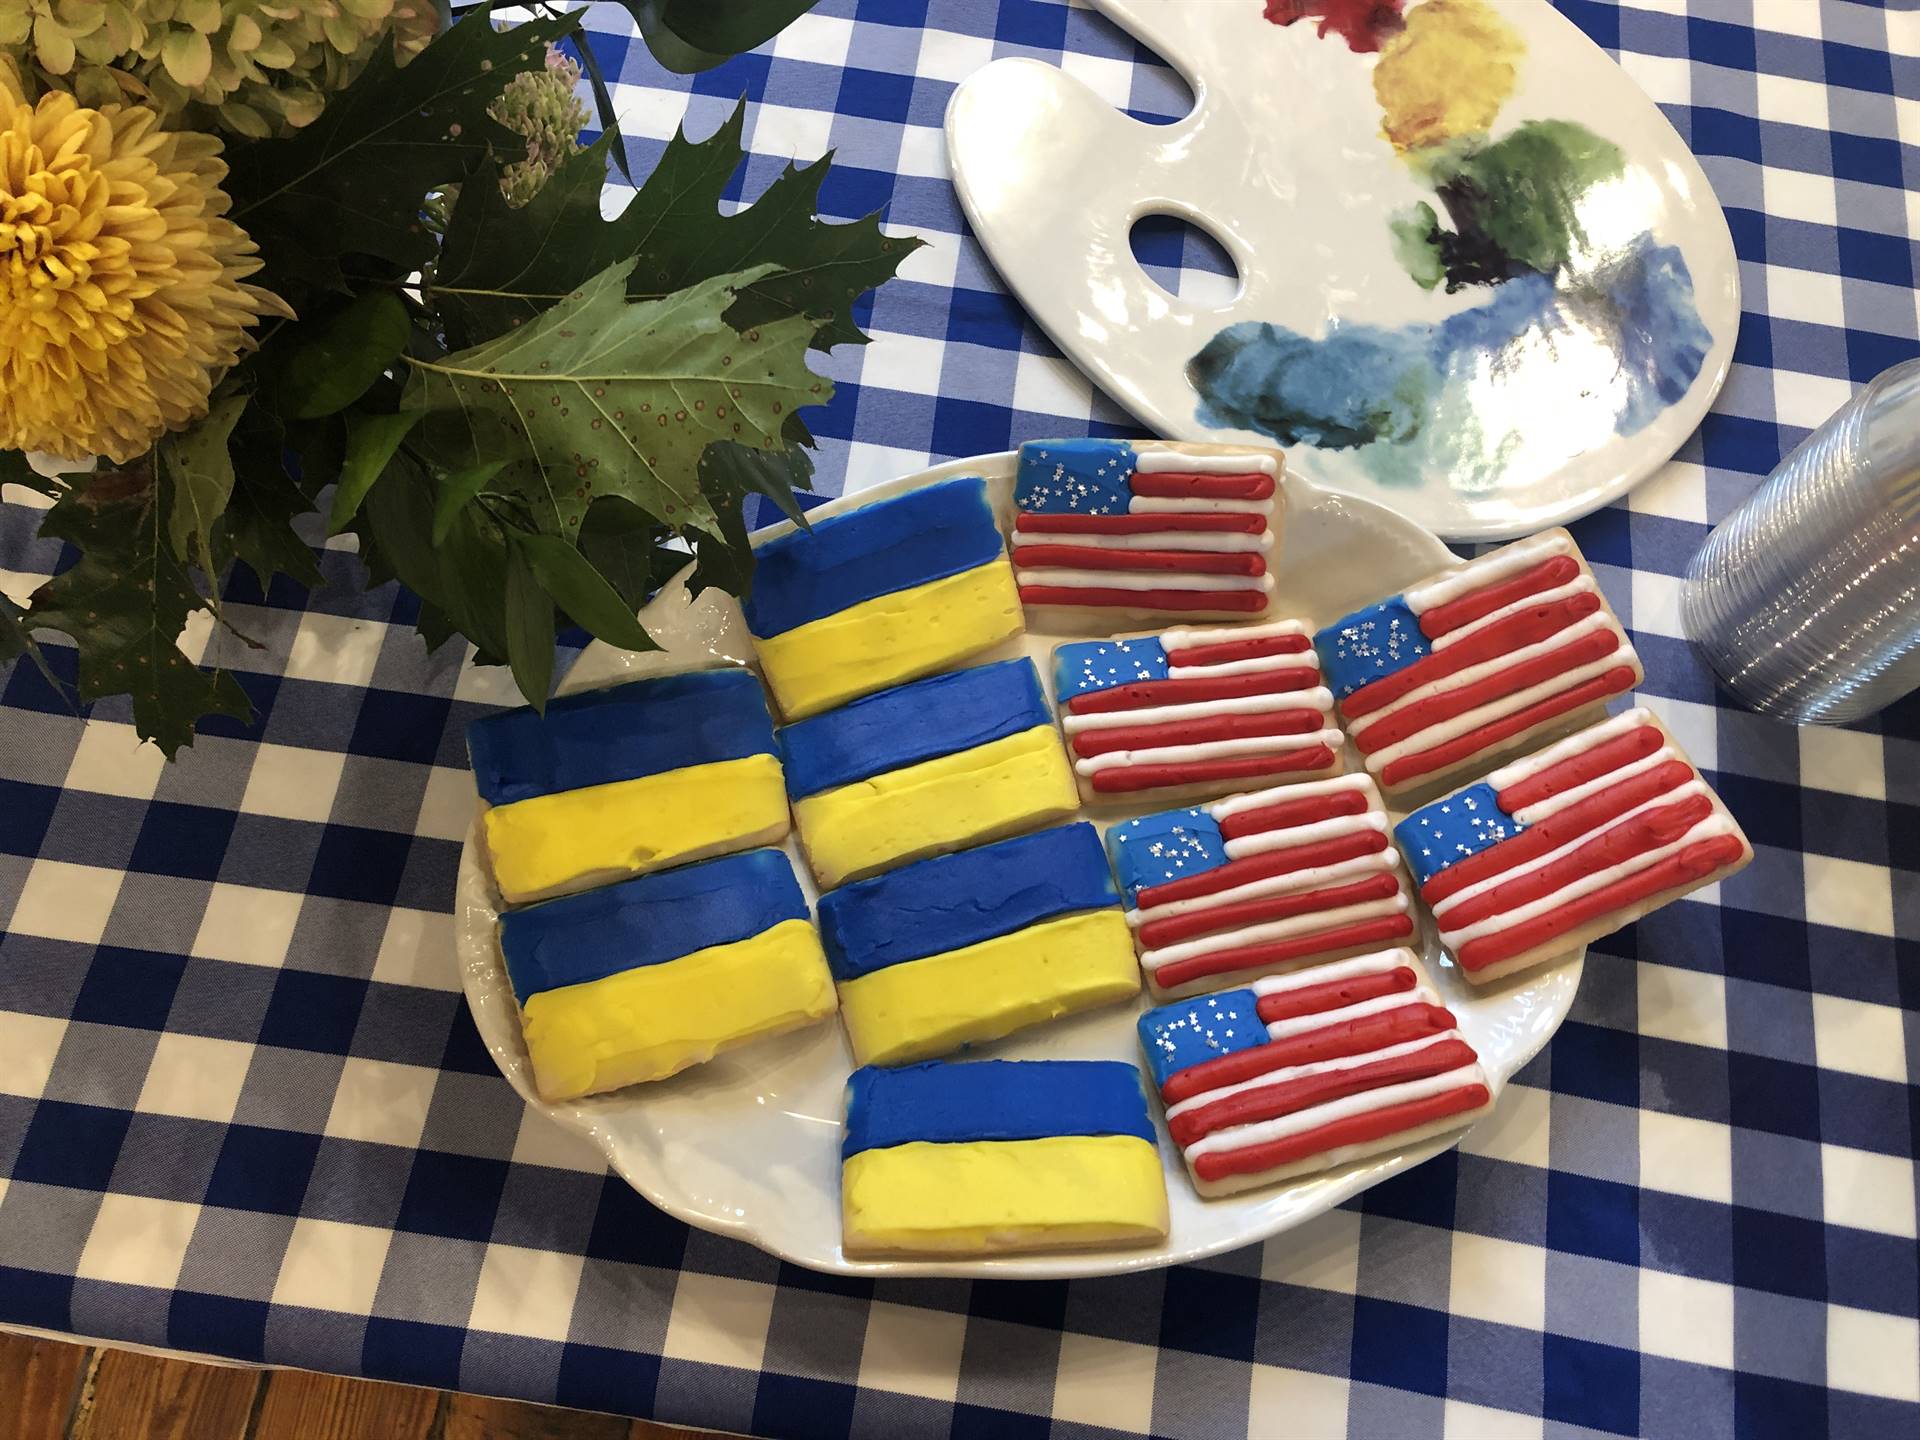 ukraine and usa cookies